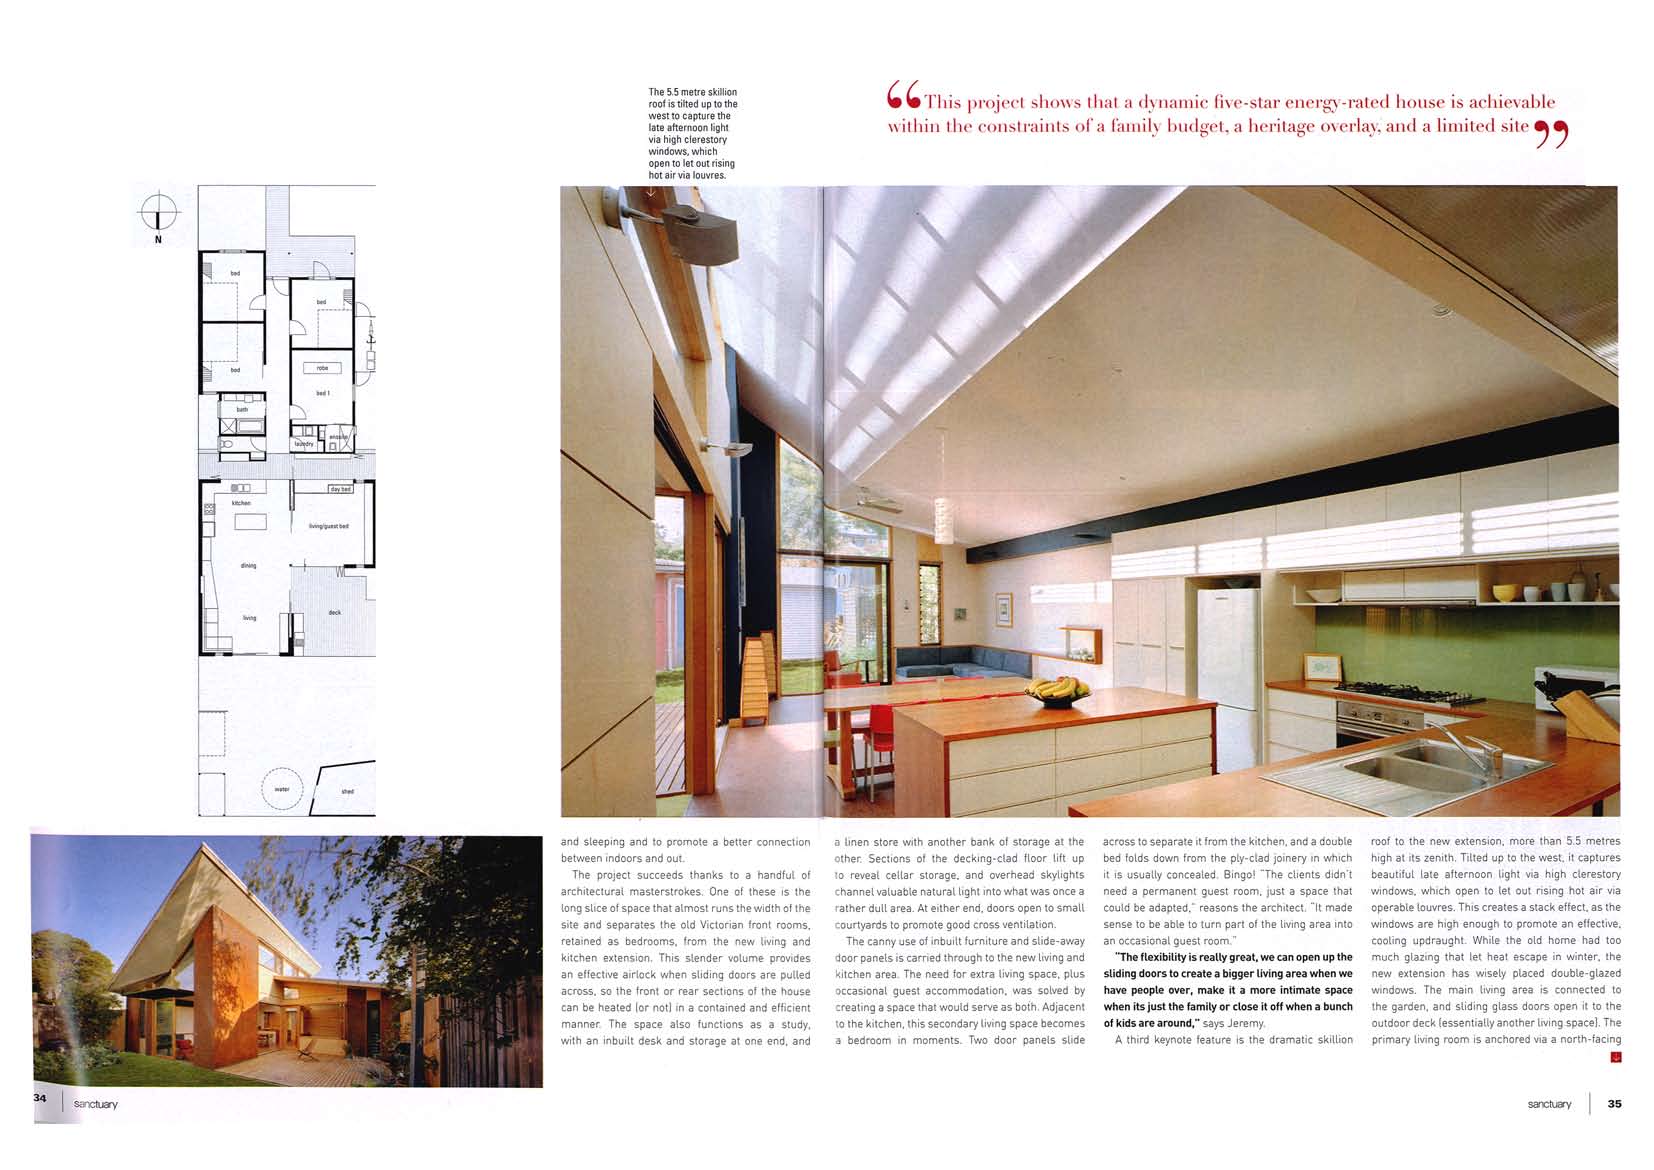 2007_Sanctuary Magazine_The Flexible Home__Page_3.jpg